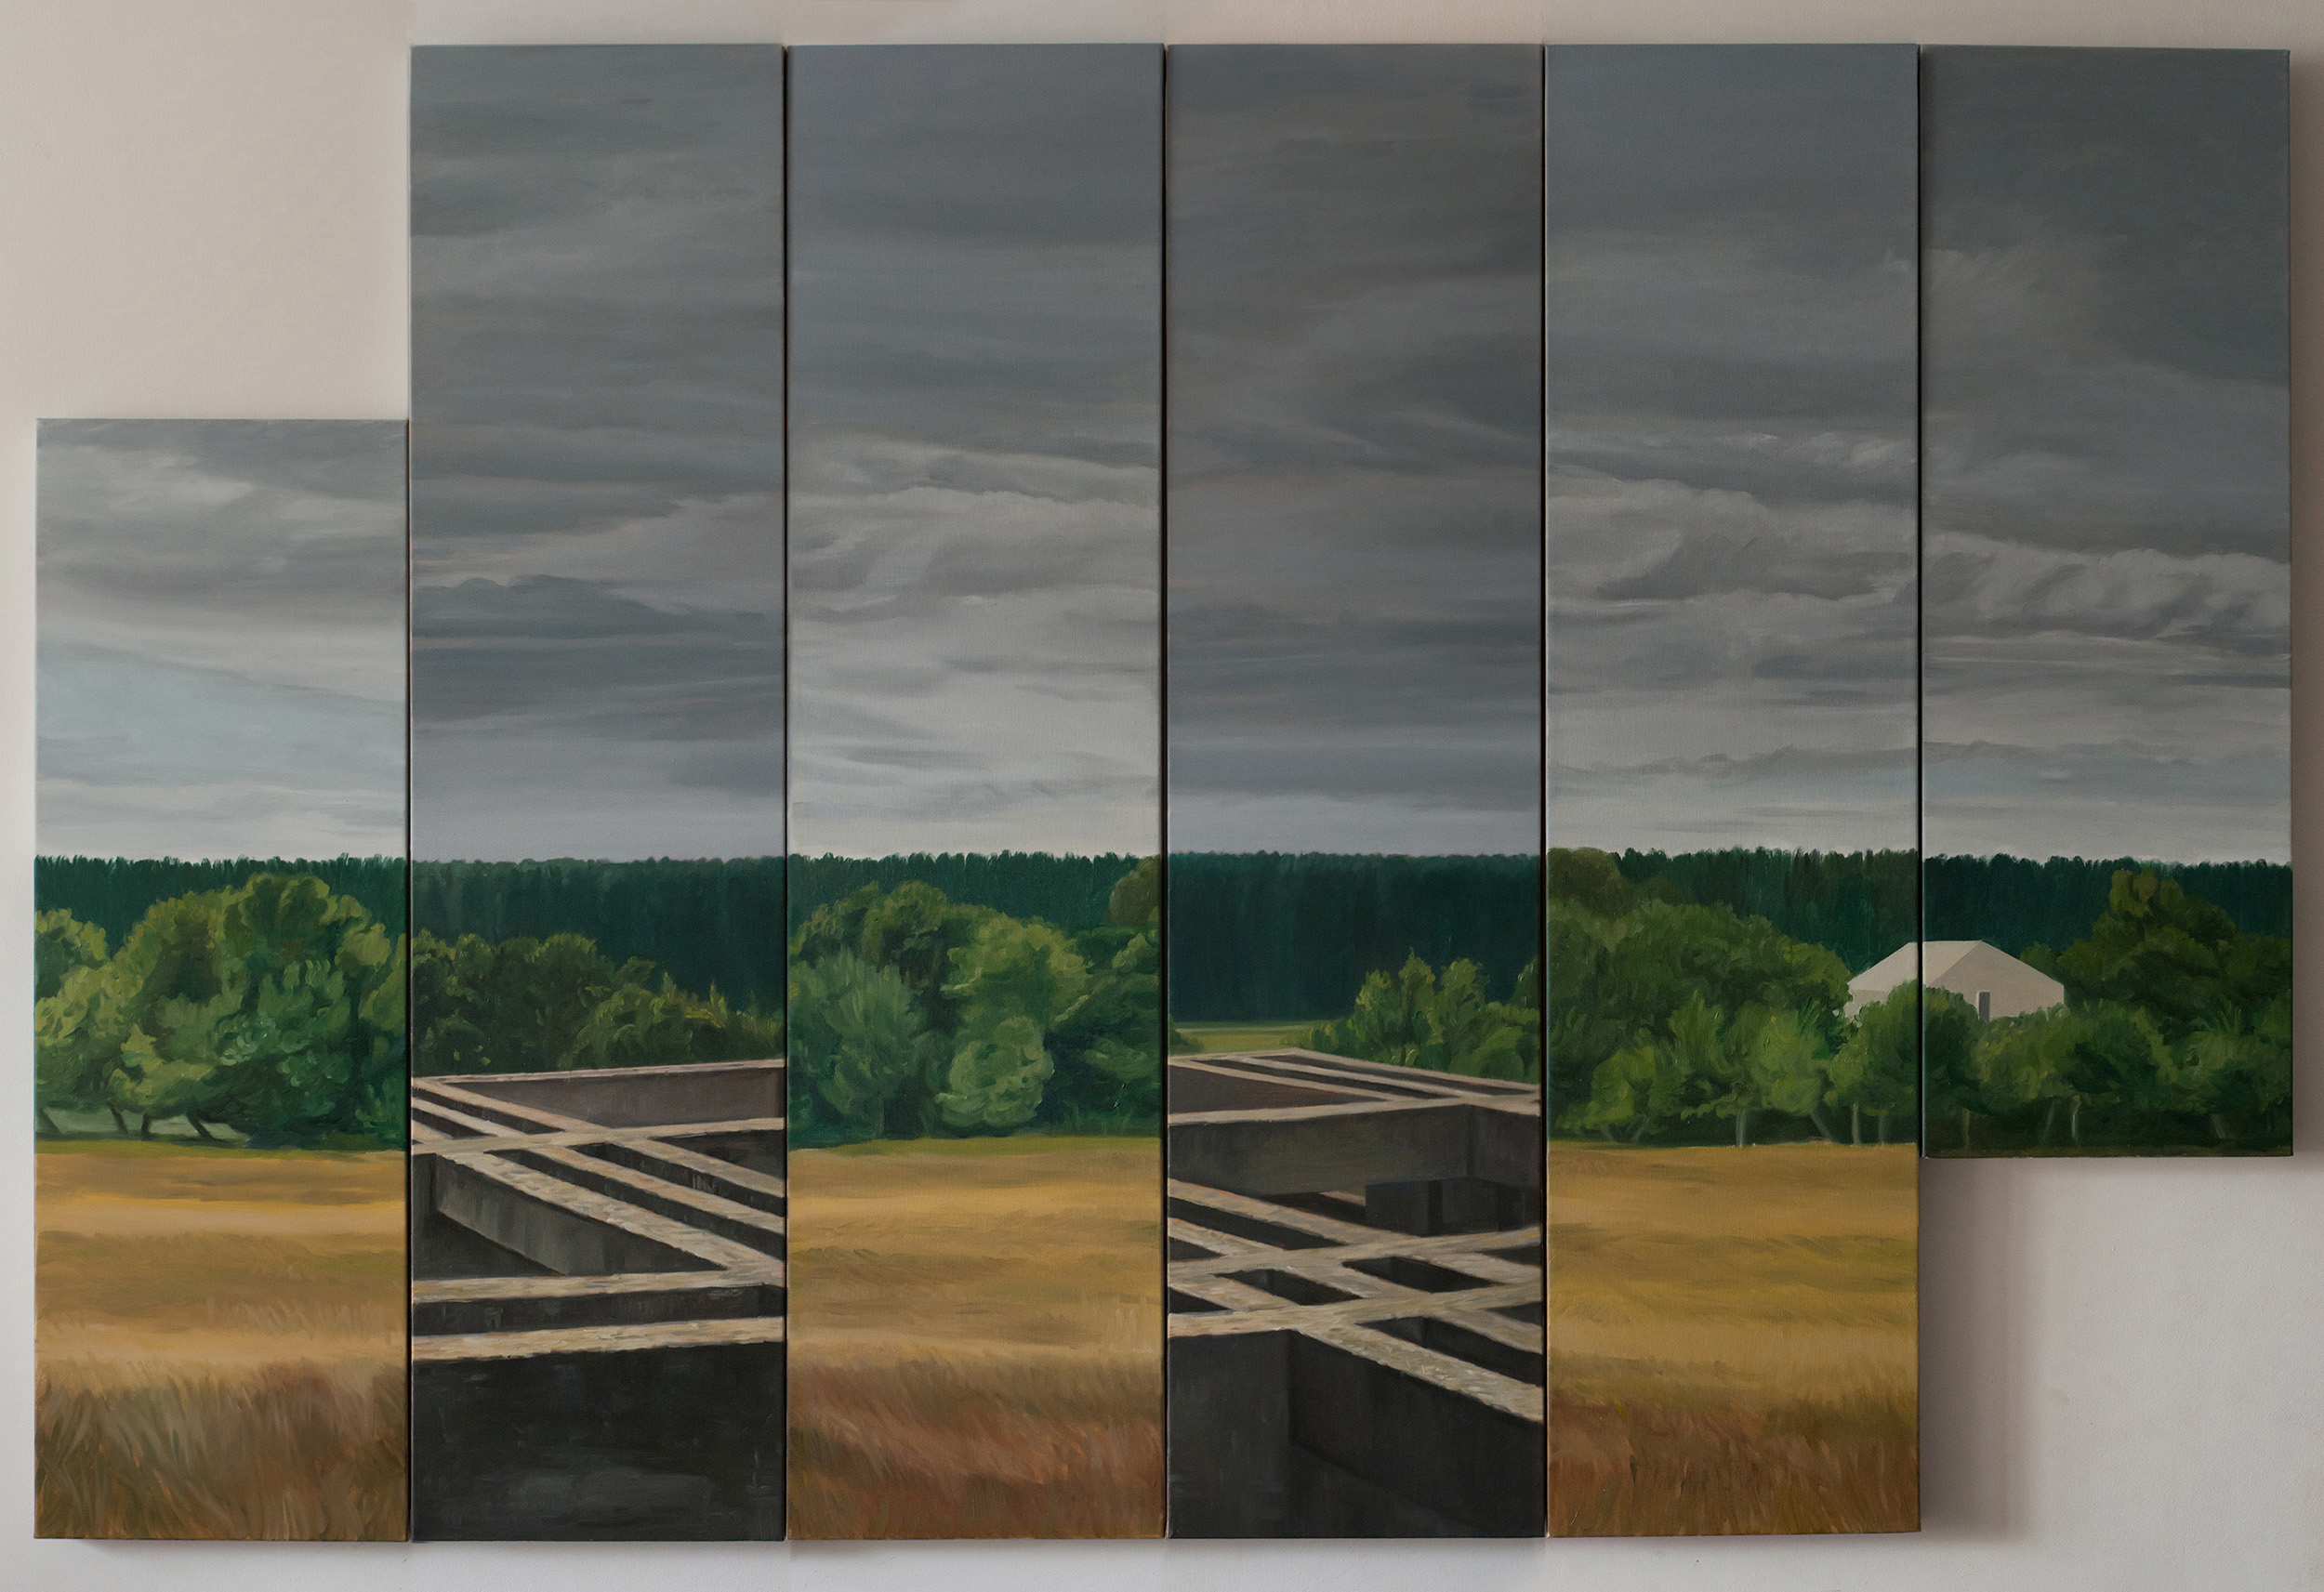 Maria M. Bordeanu - The Field v2, 2018, oil on canvas, 120 x 180 cm